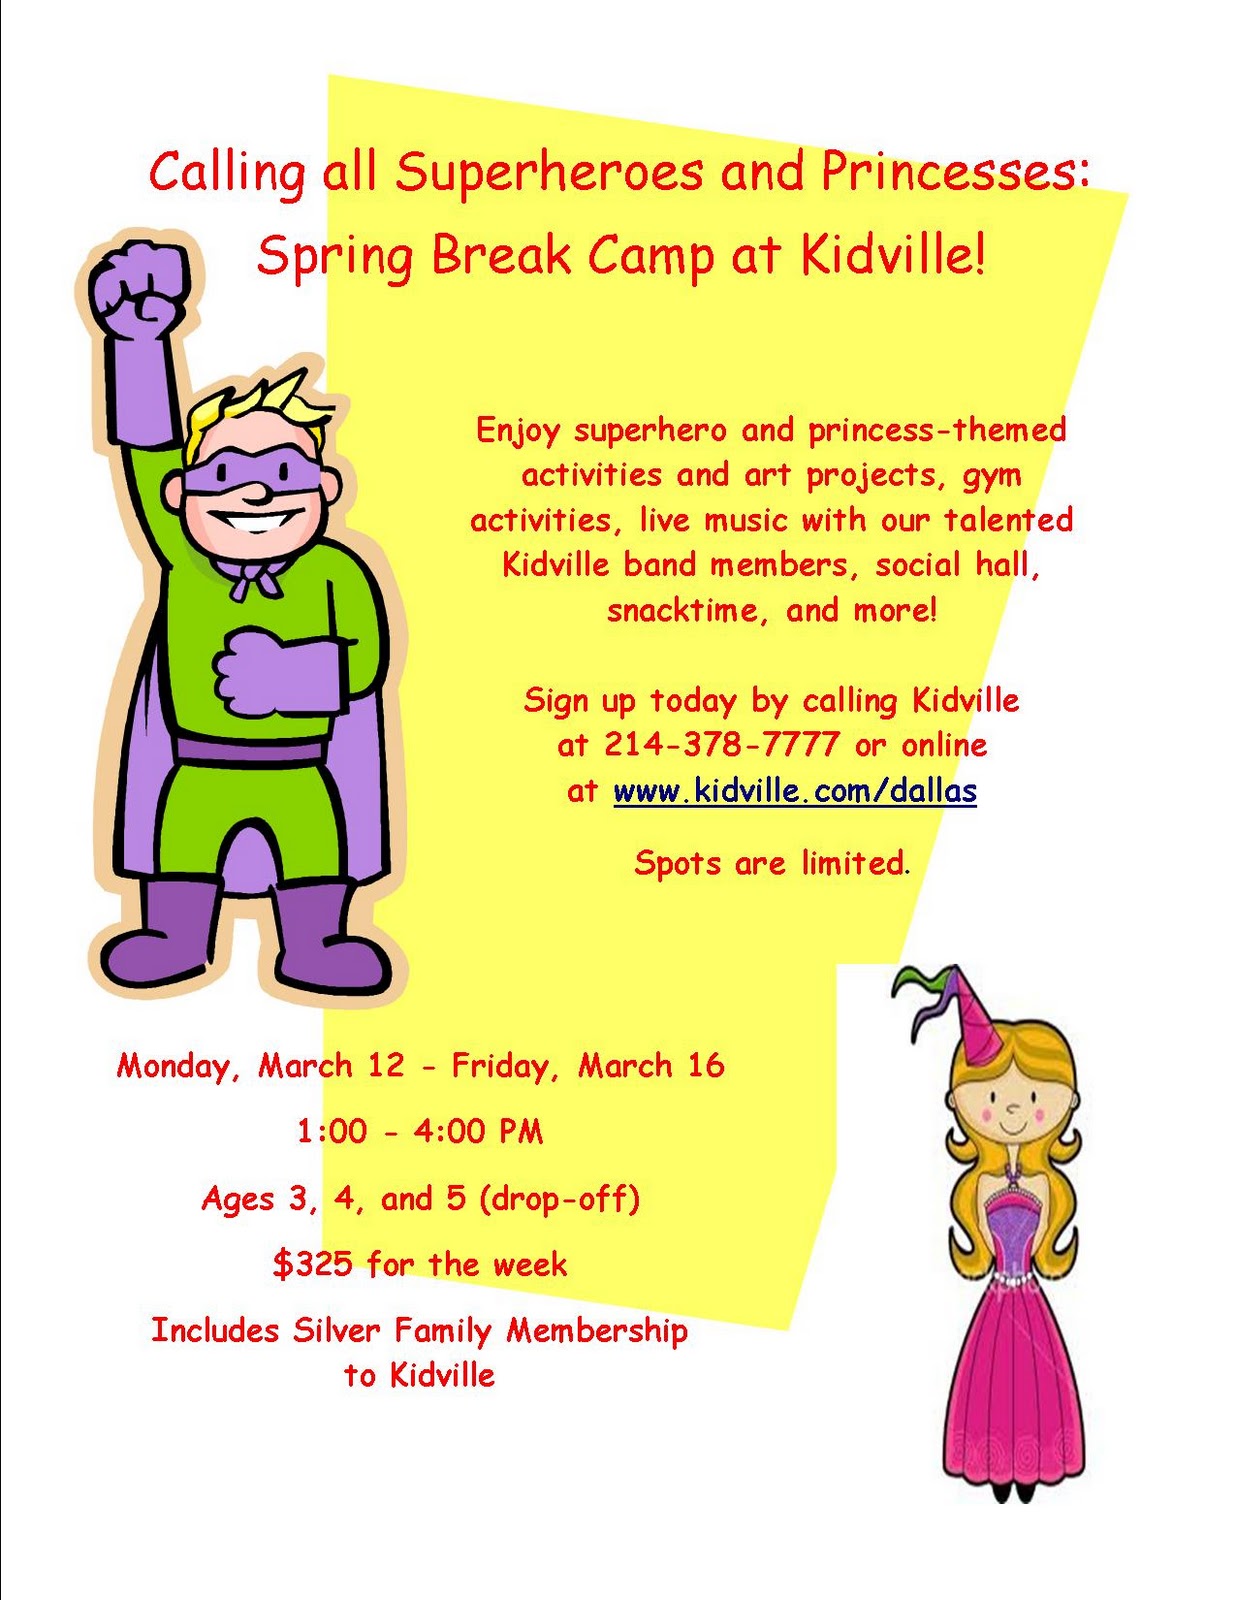 kidville-dallas-blog-spring-break-camp-calling-all-superheroes-and-spring-break-camp